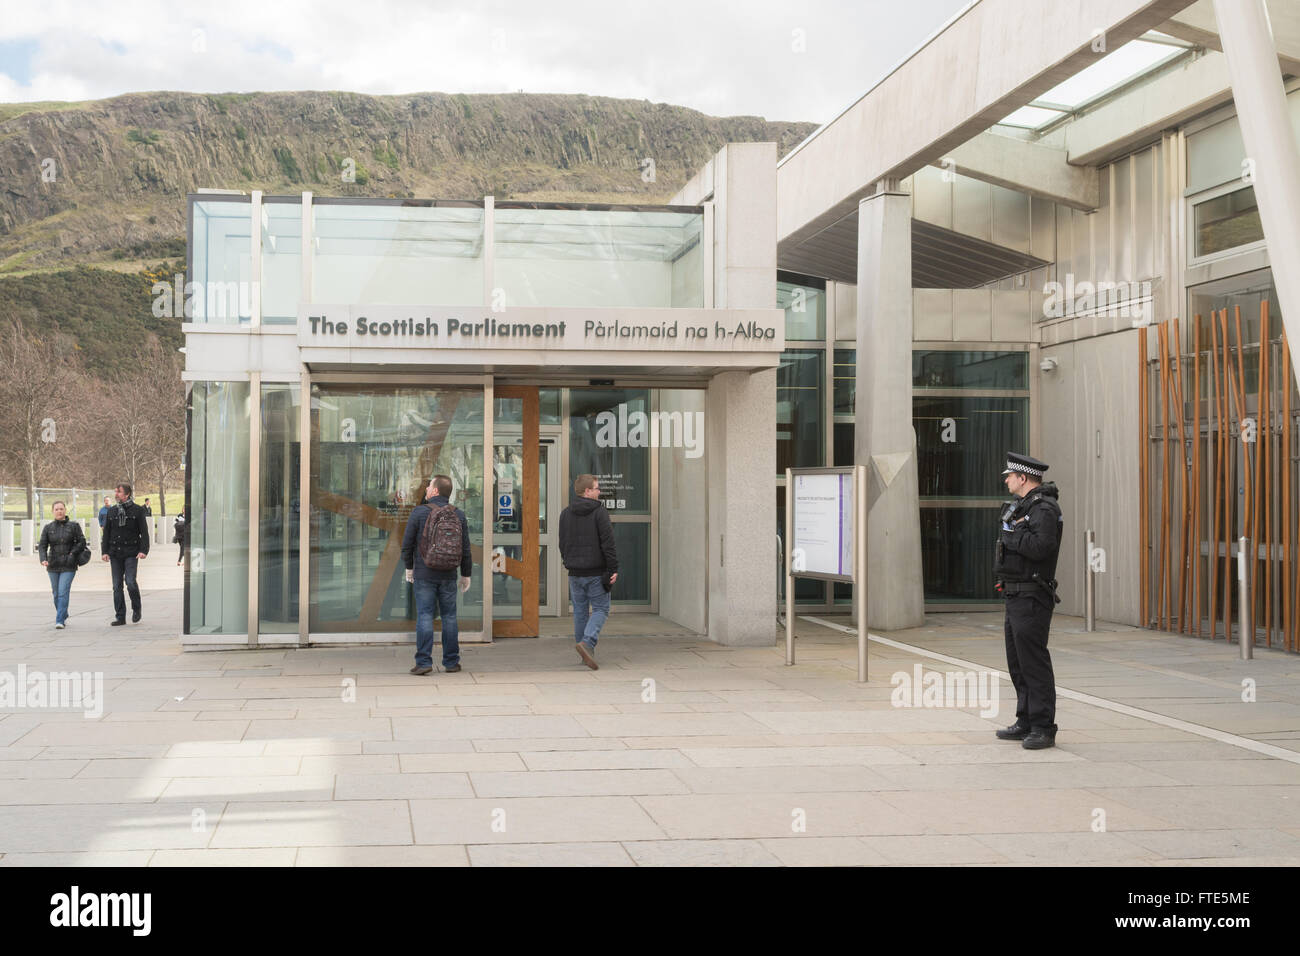 Holyrood - The Scottish Parliament building visitor public entrance in Holyrood Park, Edinburgh, Scotland, UK Stock Photo